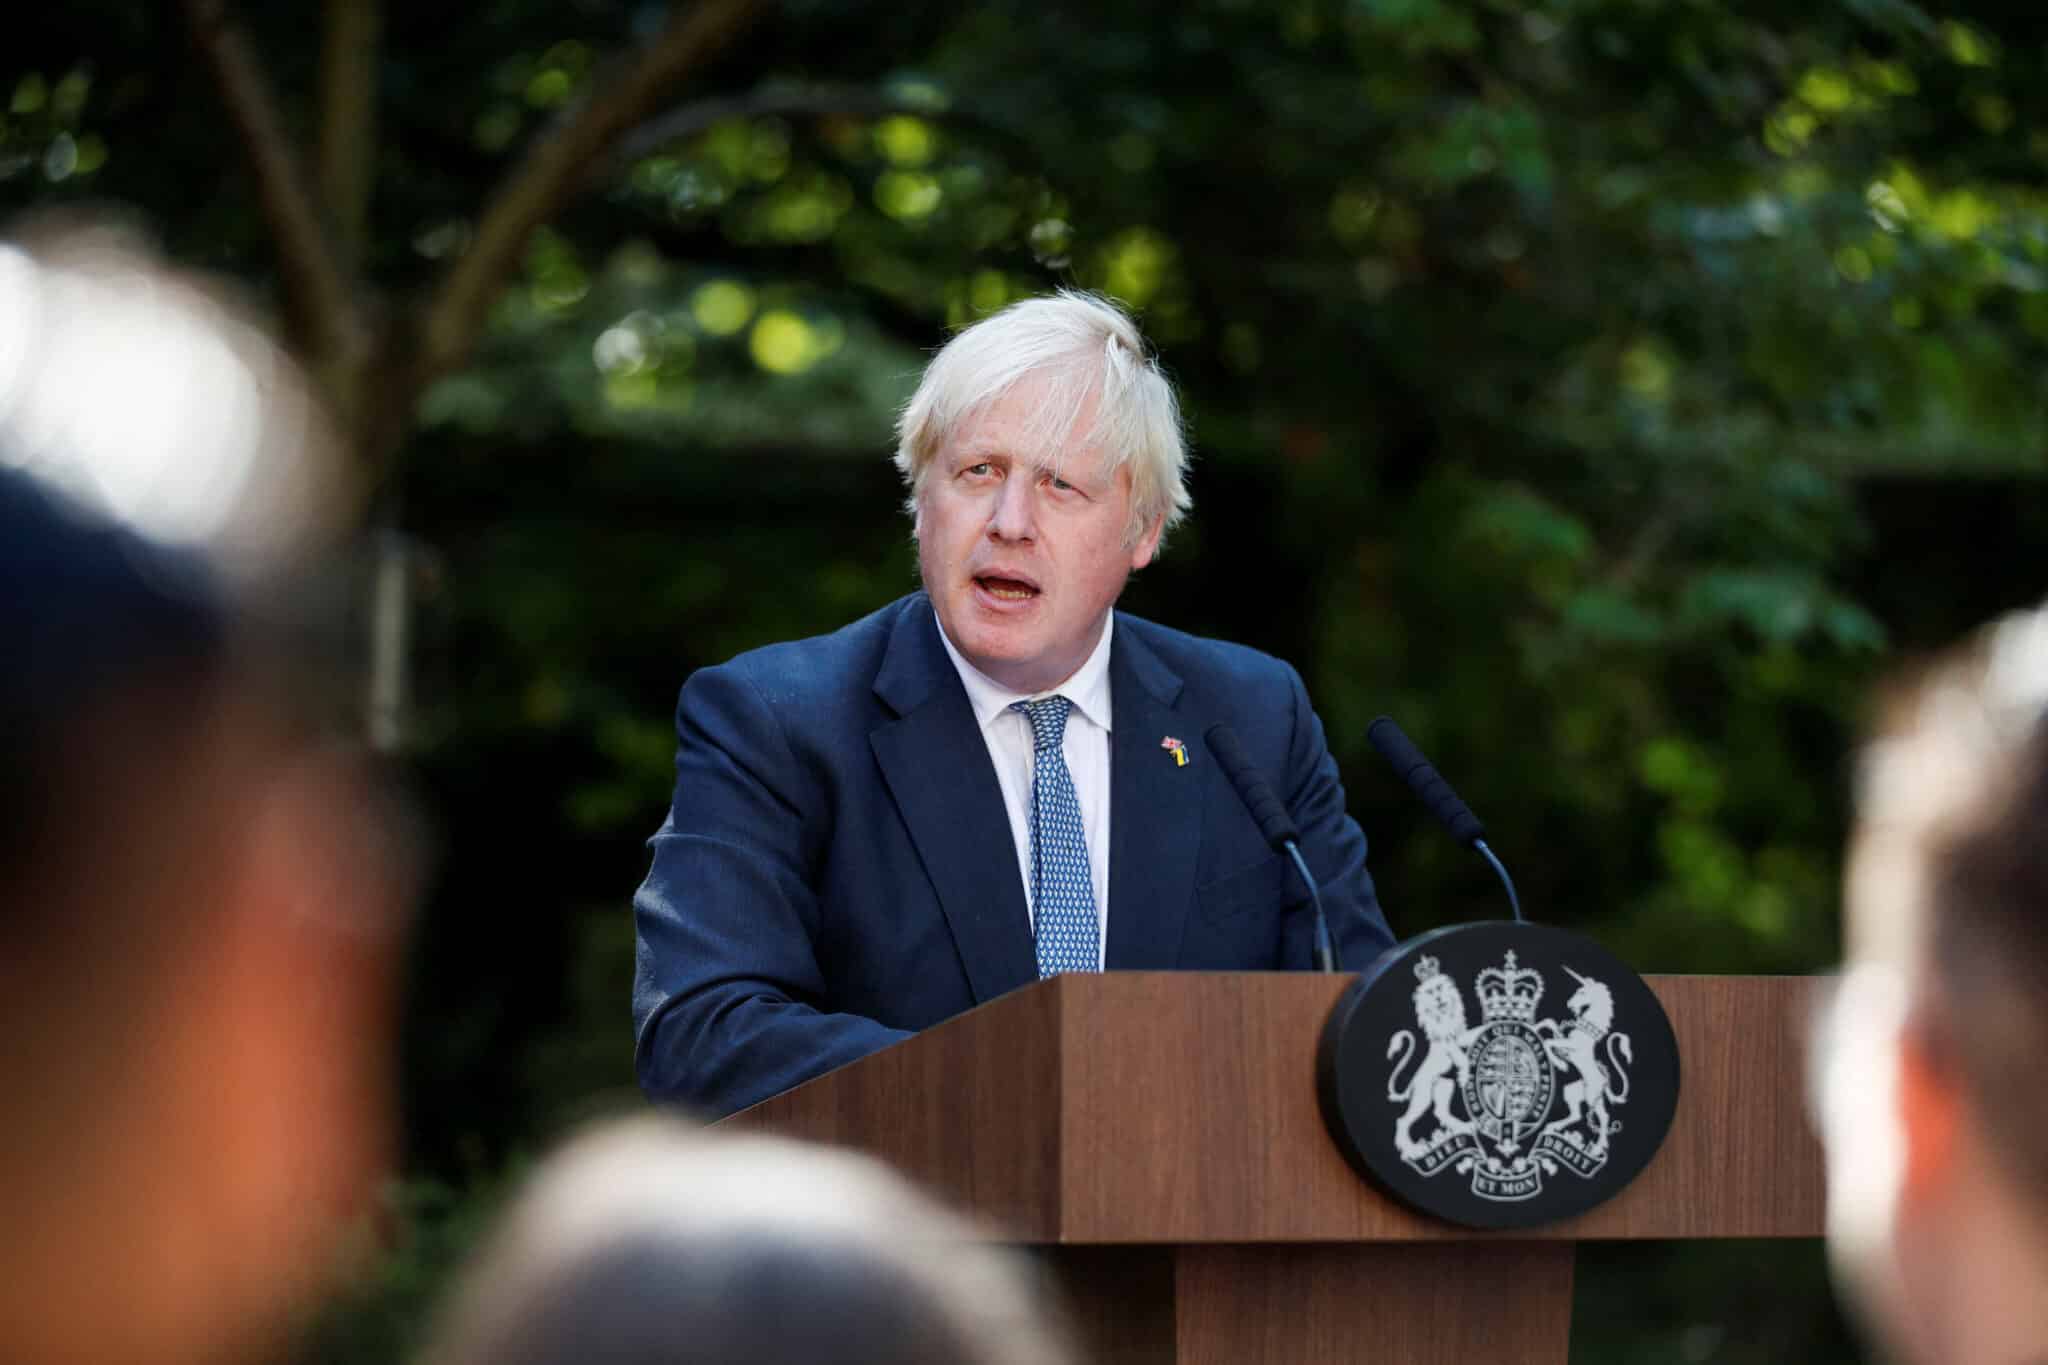 In this photograph Boris Johnson speaks behind a podium